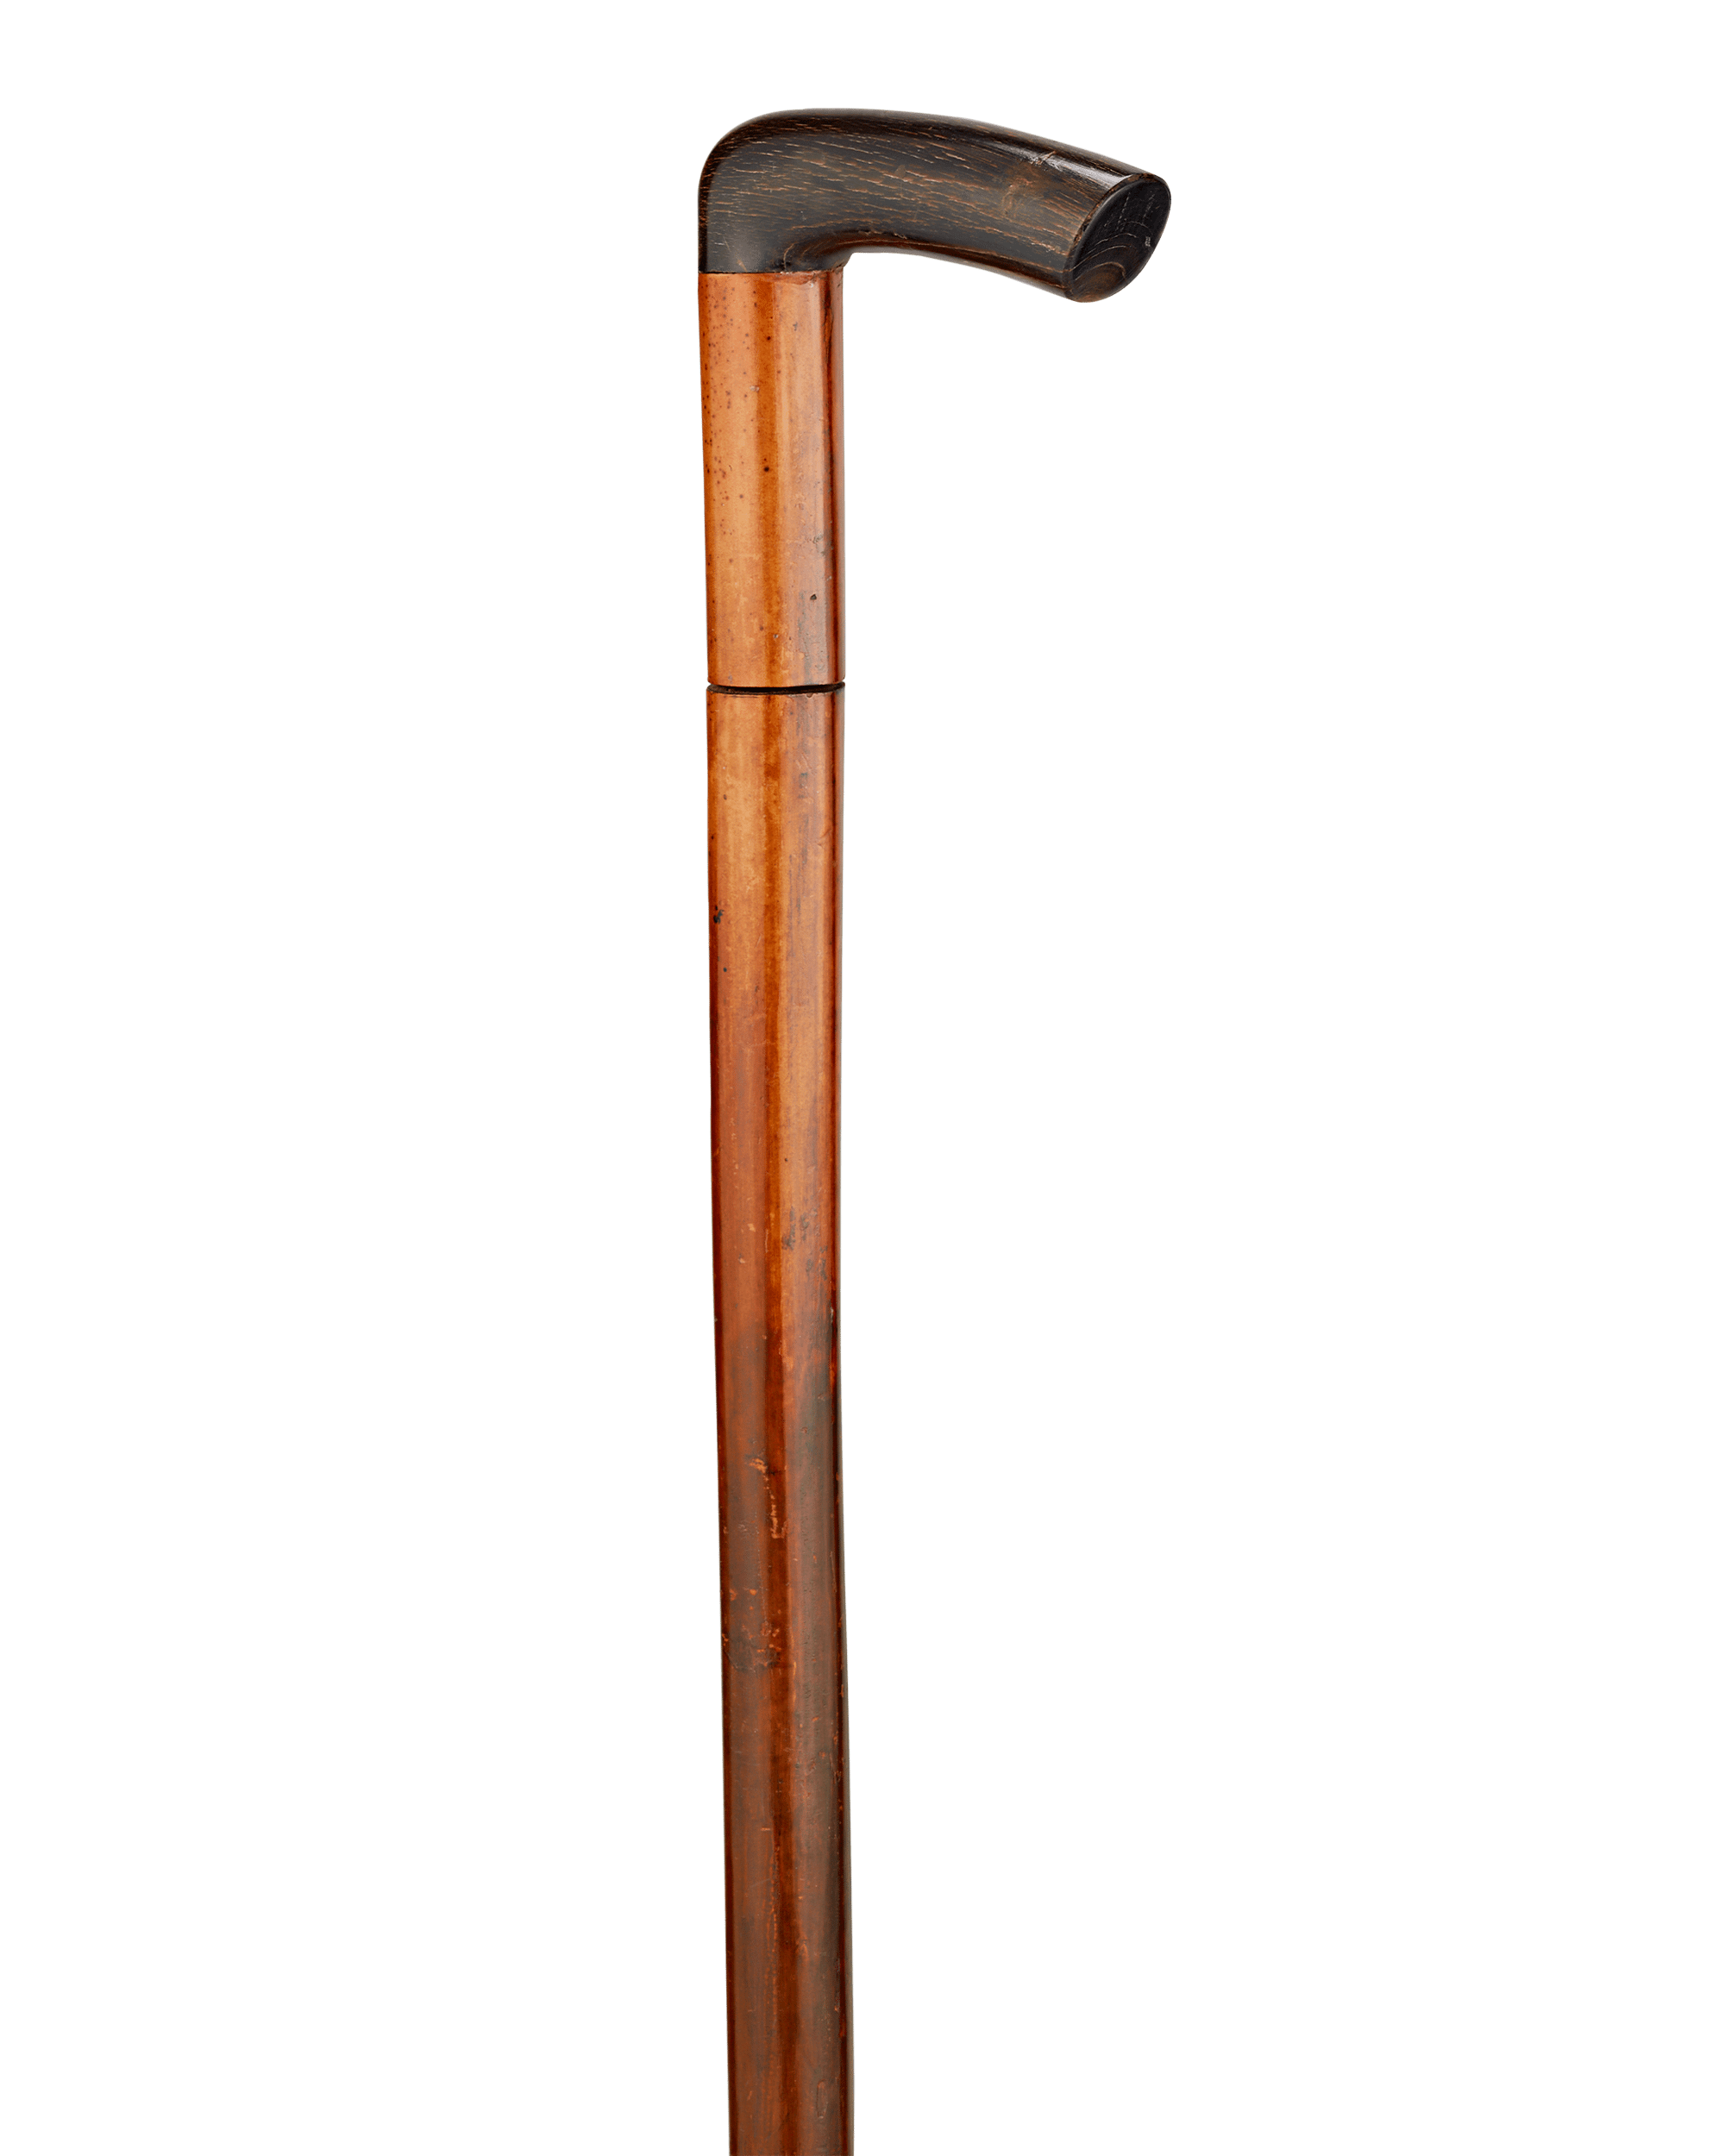 Twinkle Rosewood Teak Polished Brass Handle Walking Stick Cane